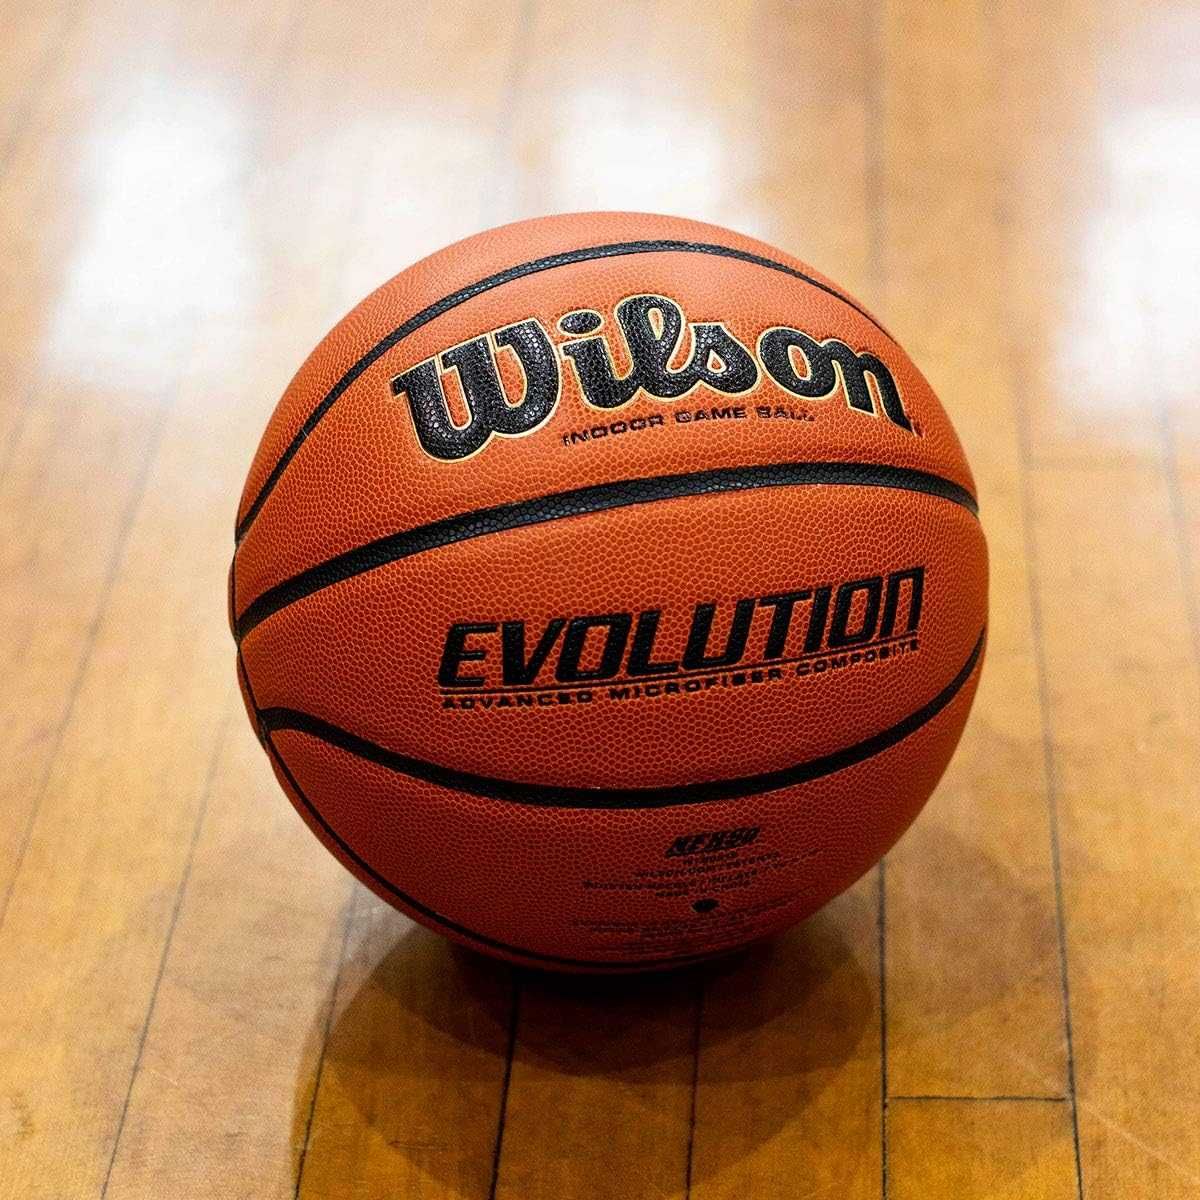 Баскетбольный мяч Wilson Evolution Indoor Game Ball. Новый!